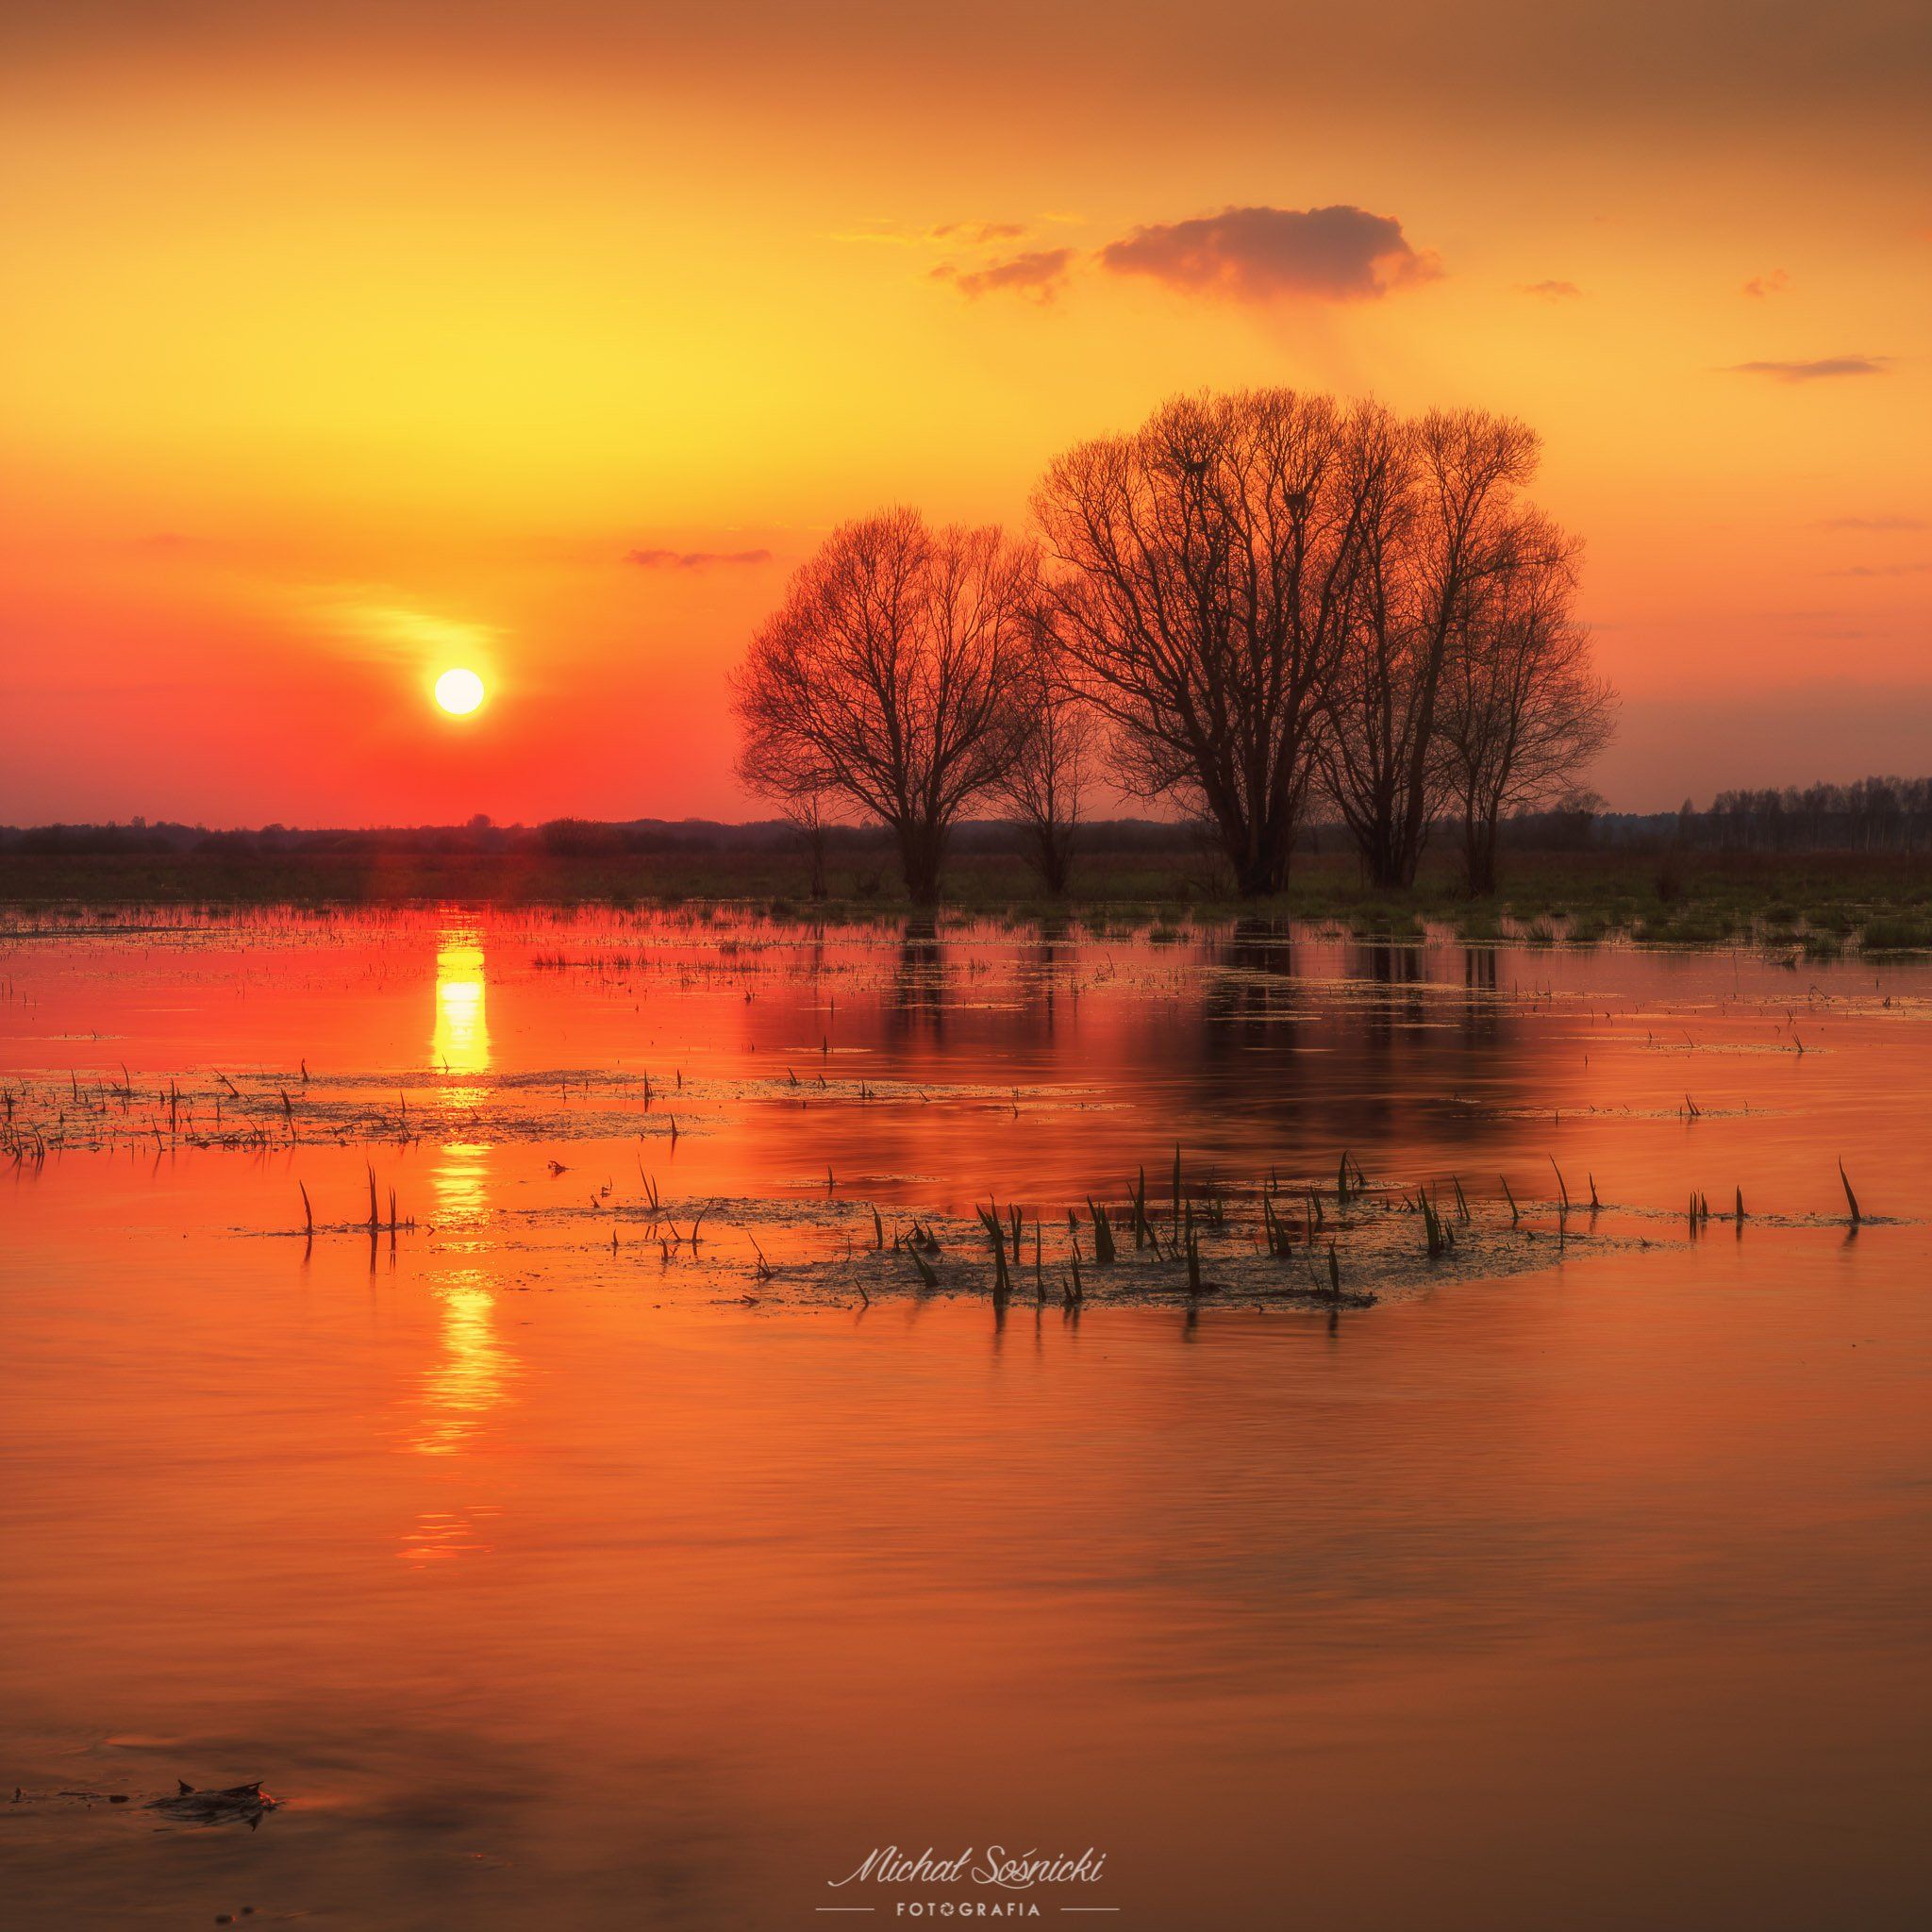 #marigolds #flowers #spring #poland #nature #beautiful #best #sky #tree #sunset, Michał Sośnicki